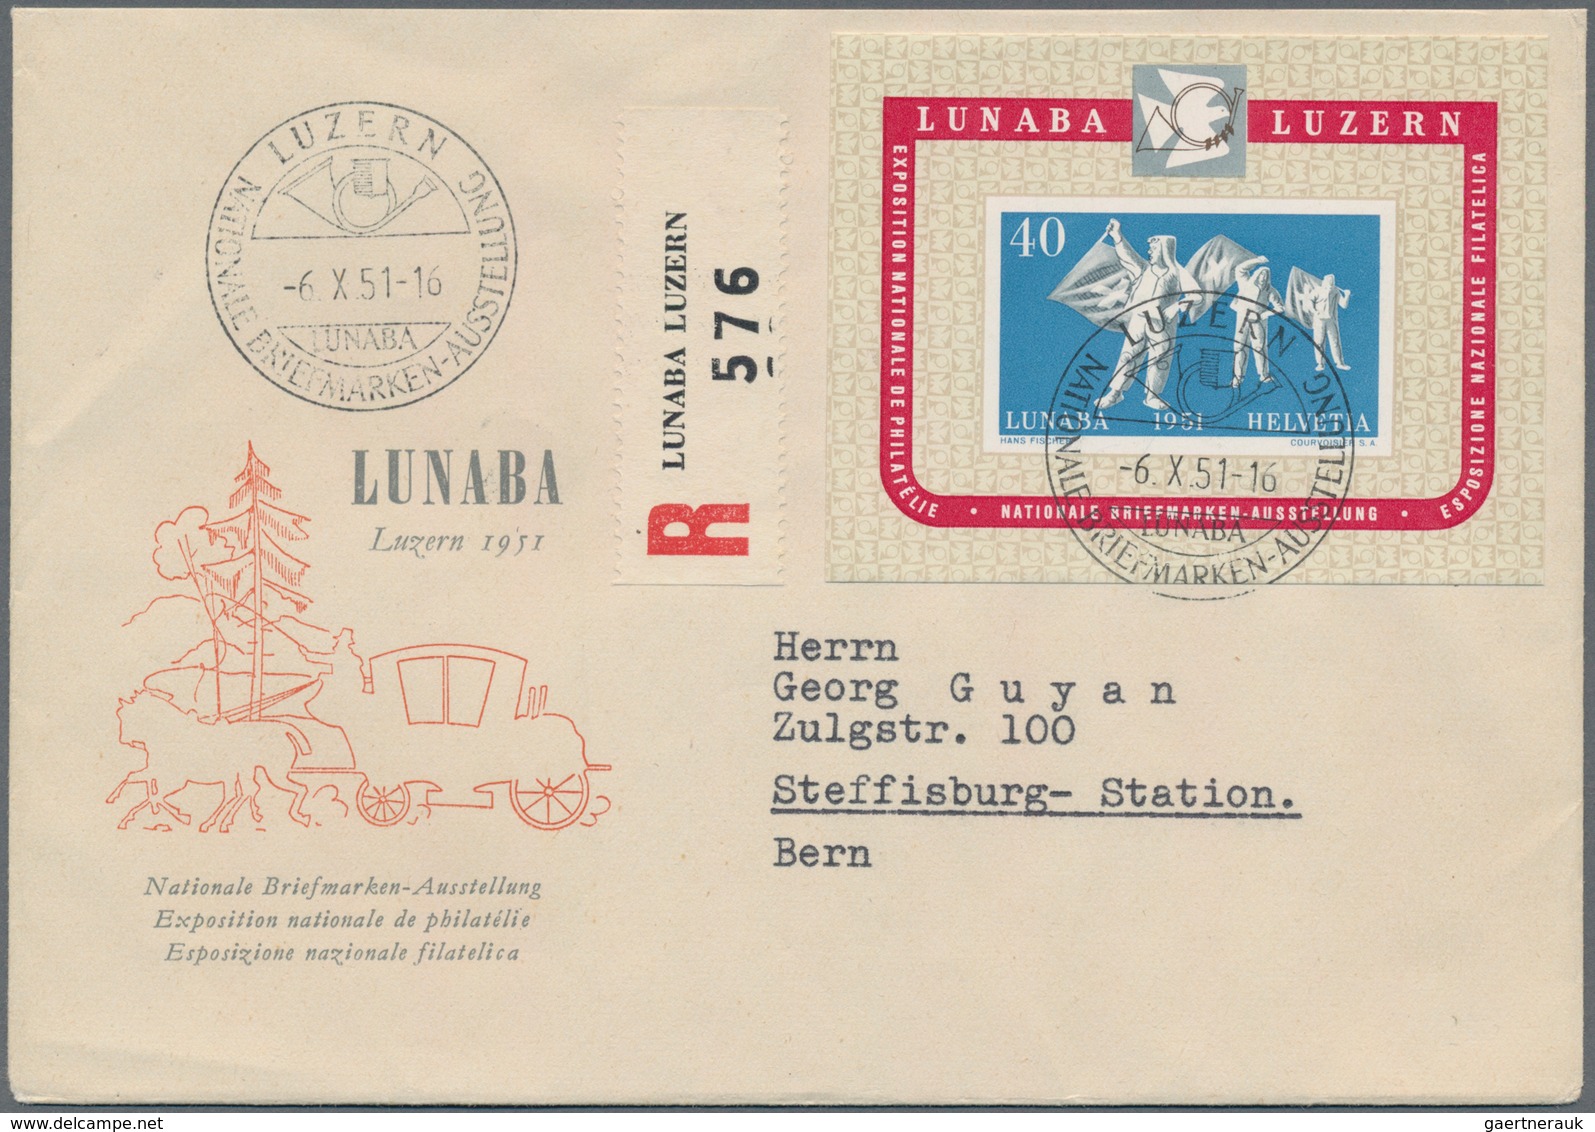 Schweiz: 1942-62: 17 FDCs Und Briefe, Dabei U.a. Pro Patria-Block '42 Auf R-Brief, Zwei Basel-Blocks - Lotes/Colecciones